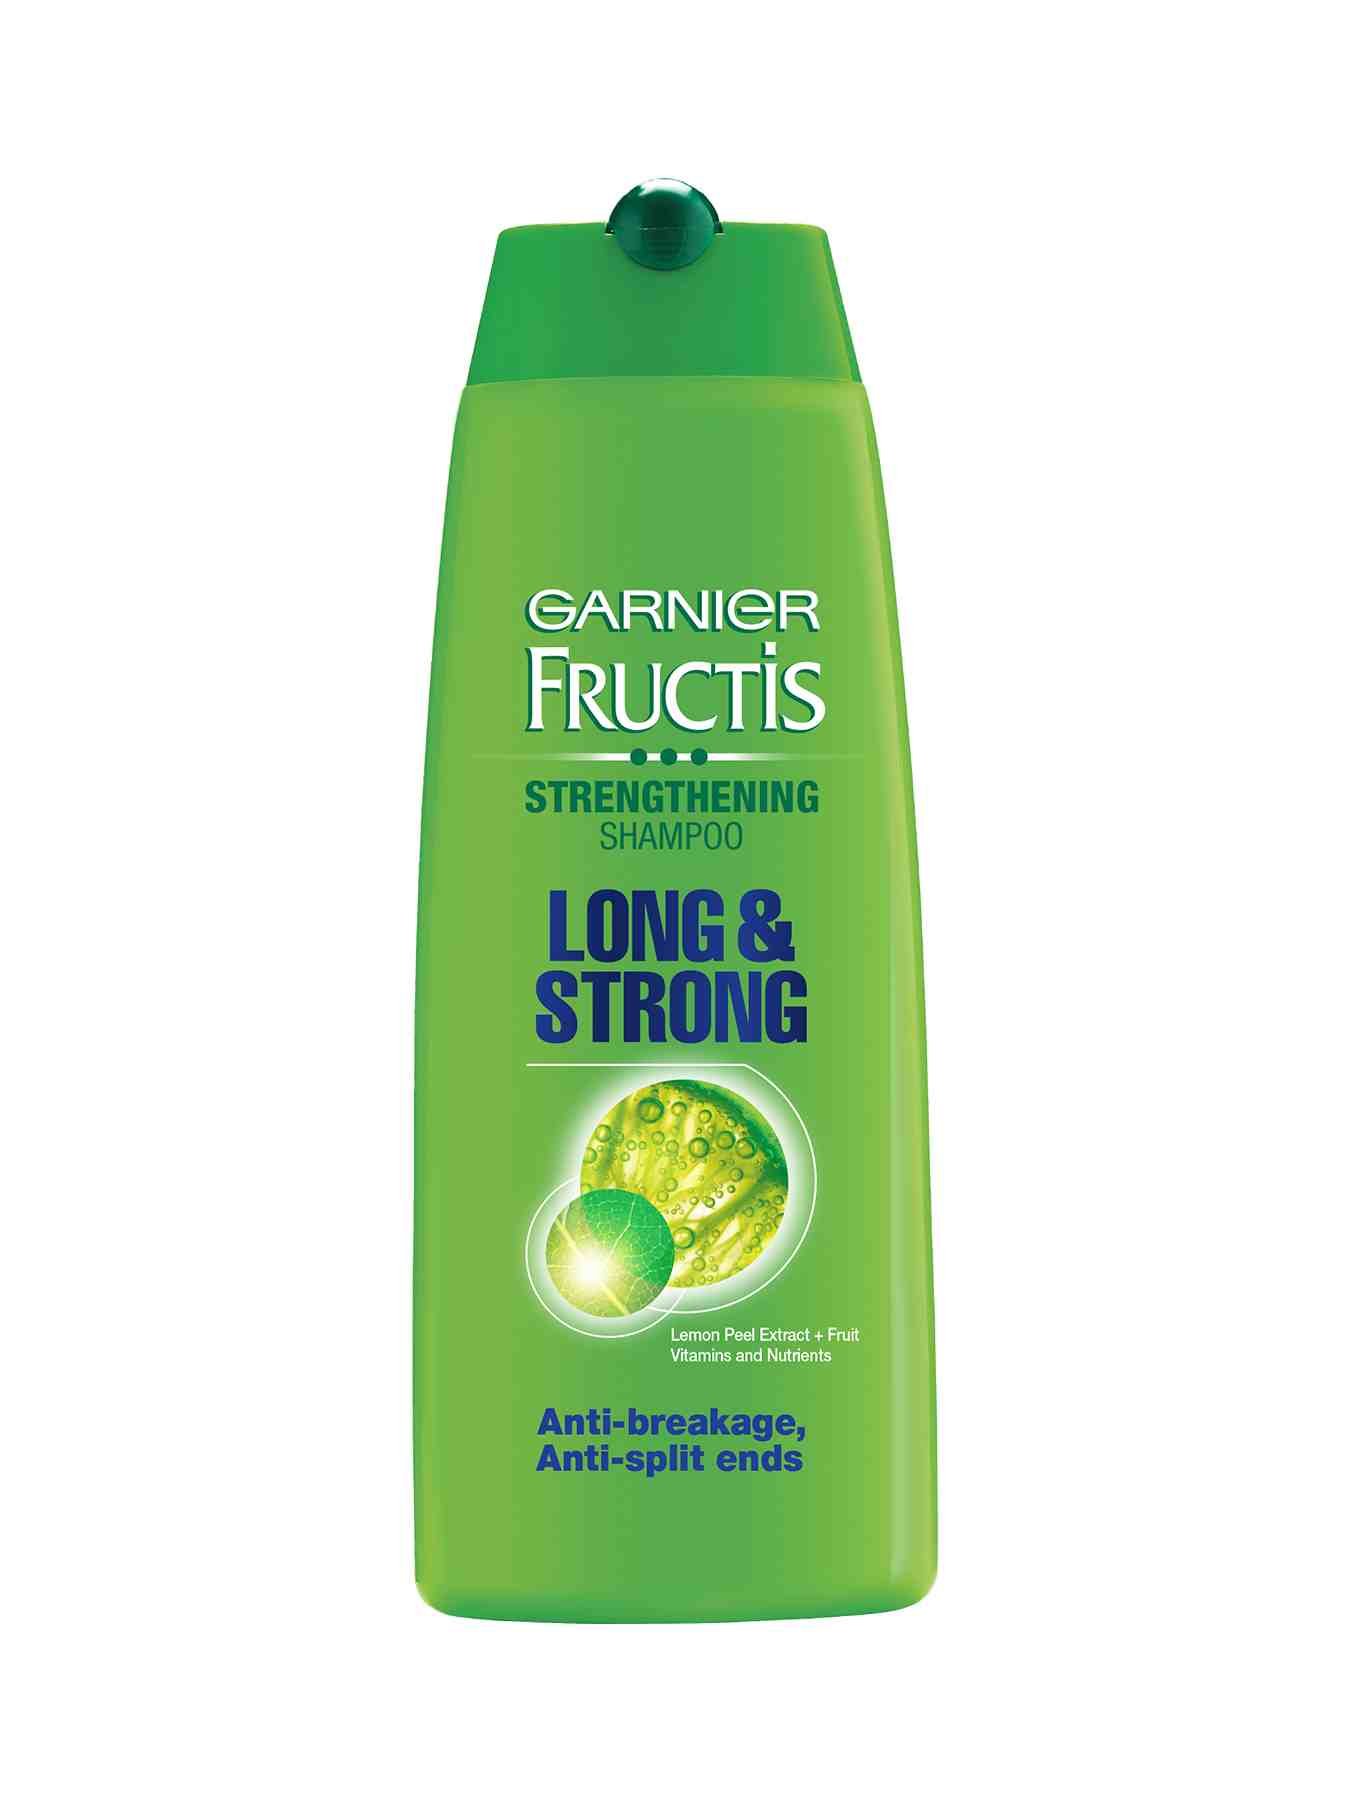 Garnier Fructis Long & Strong Shampoo 175ml